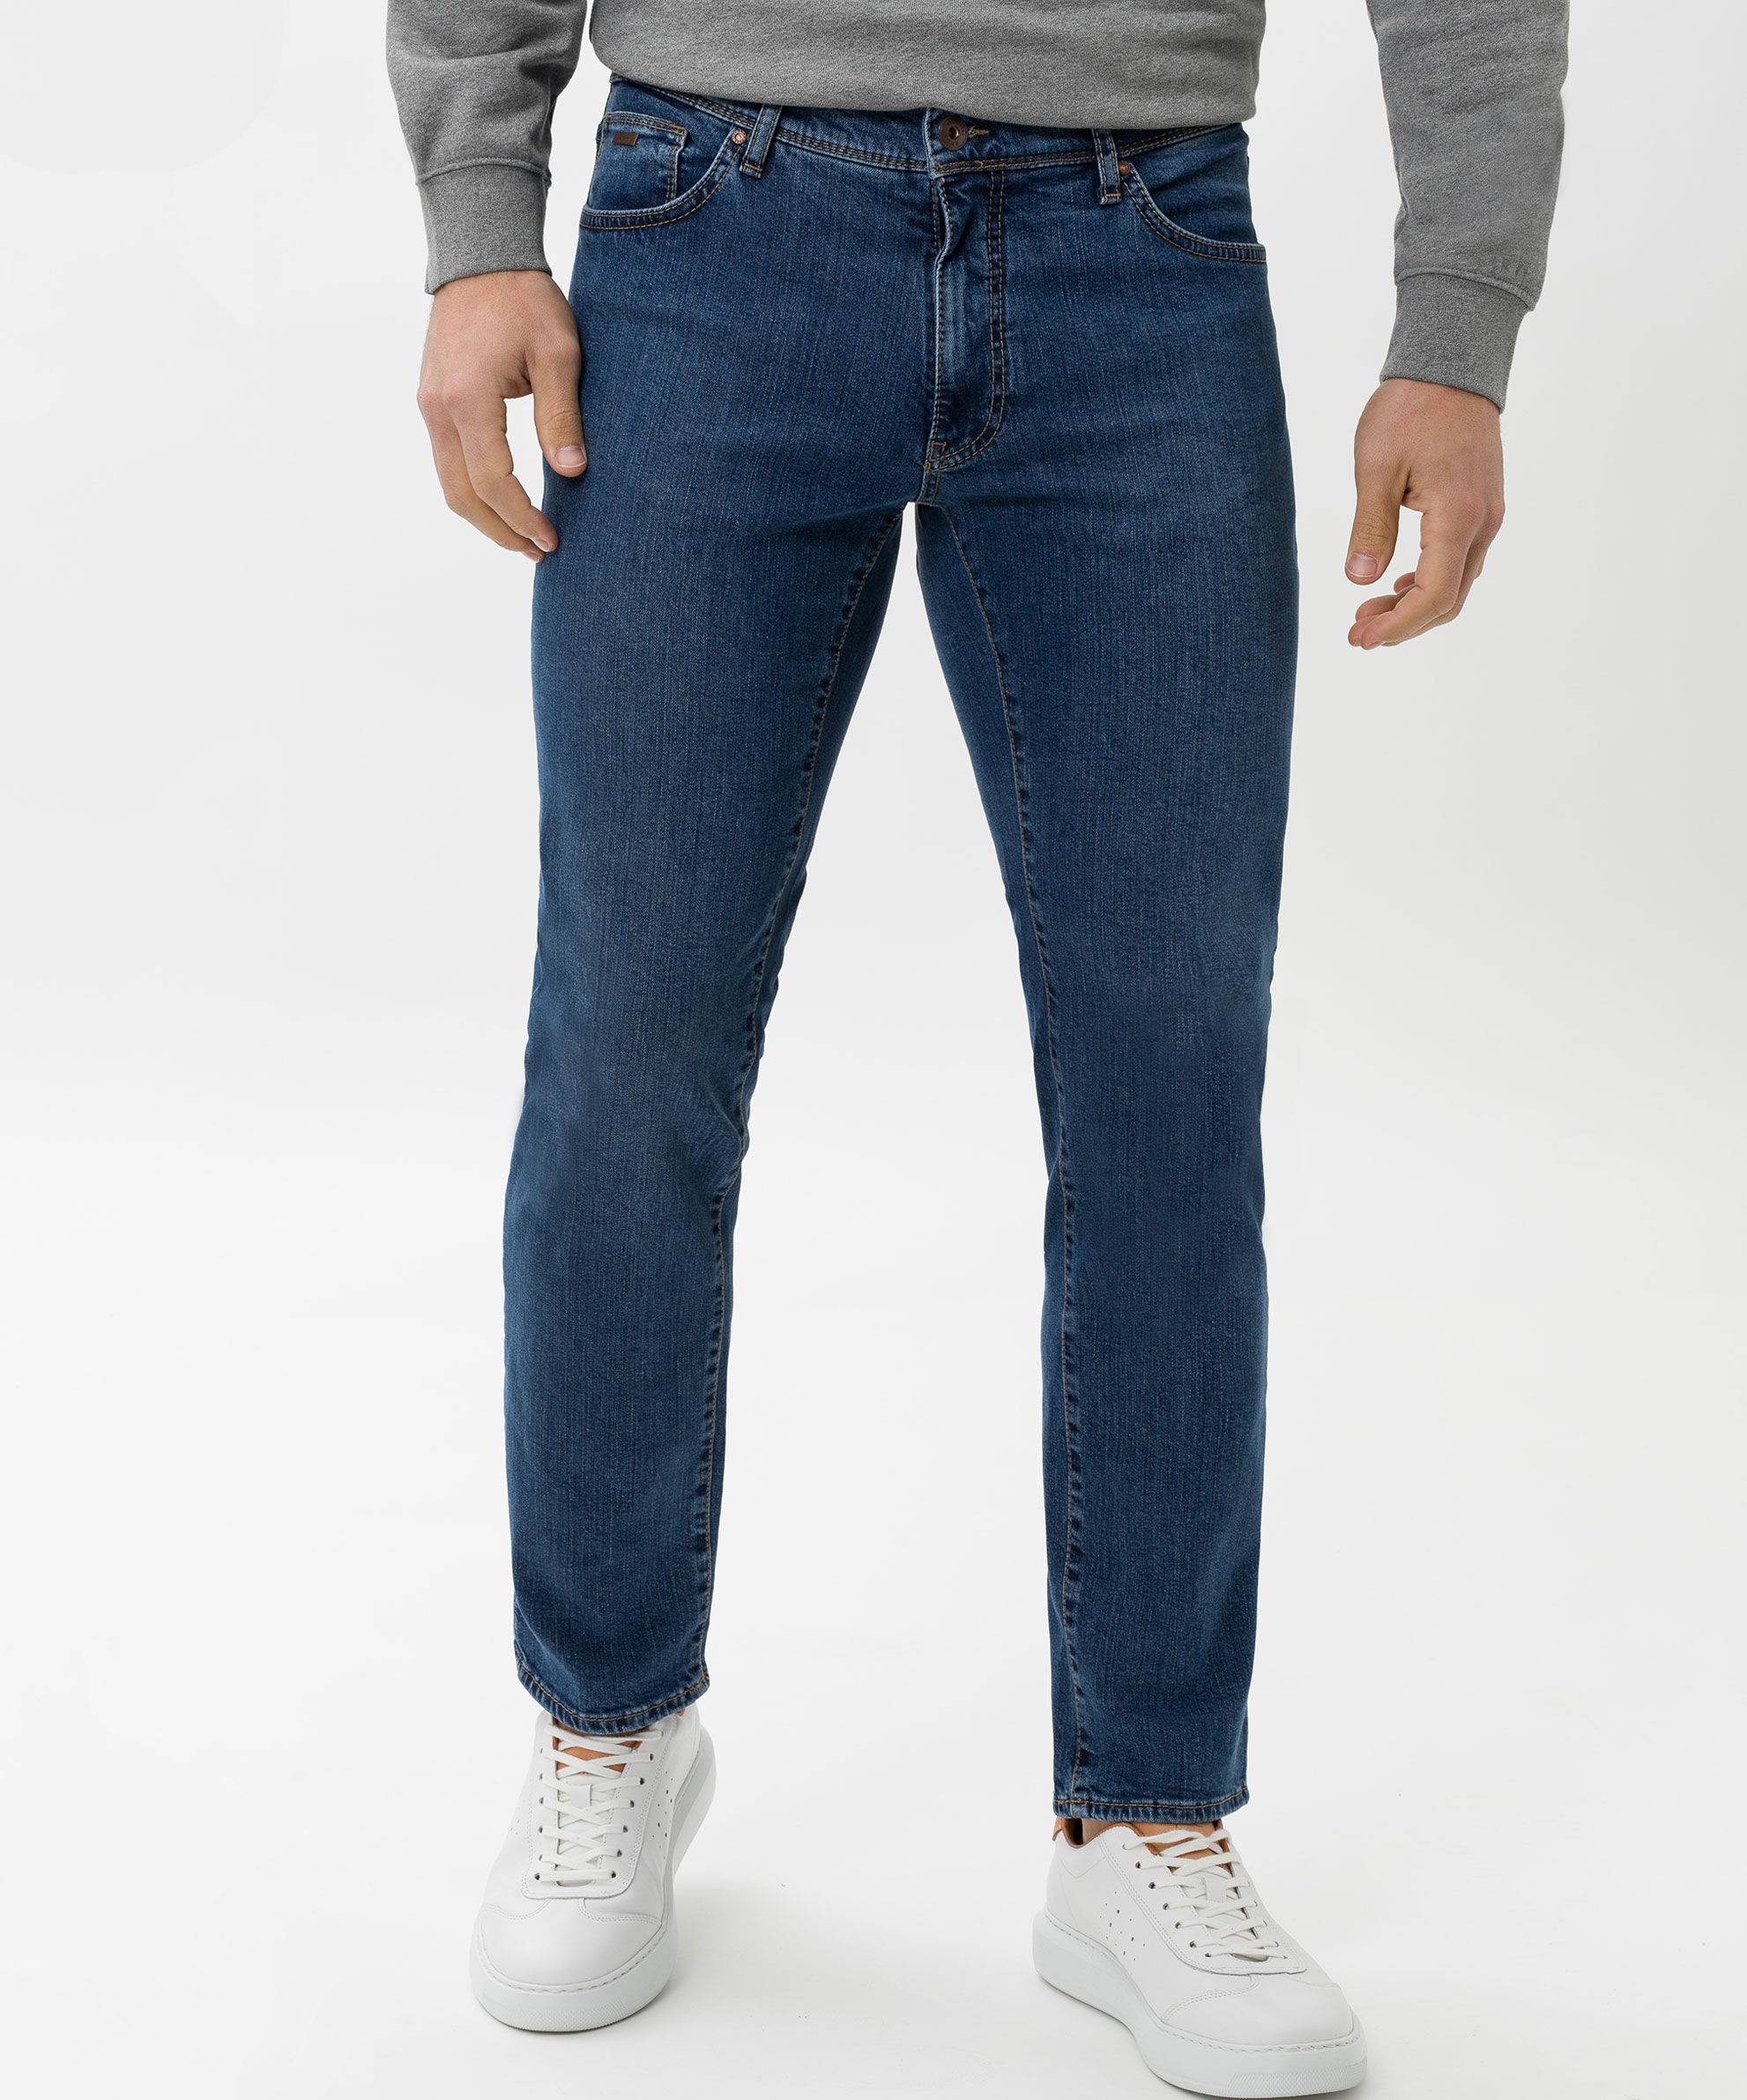 Brax Herren Jeans Hose Five Pocket Style Cadiz blau 80 0070 07960720 26